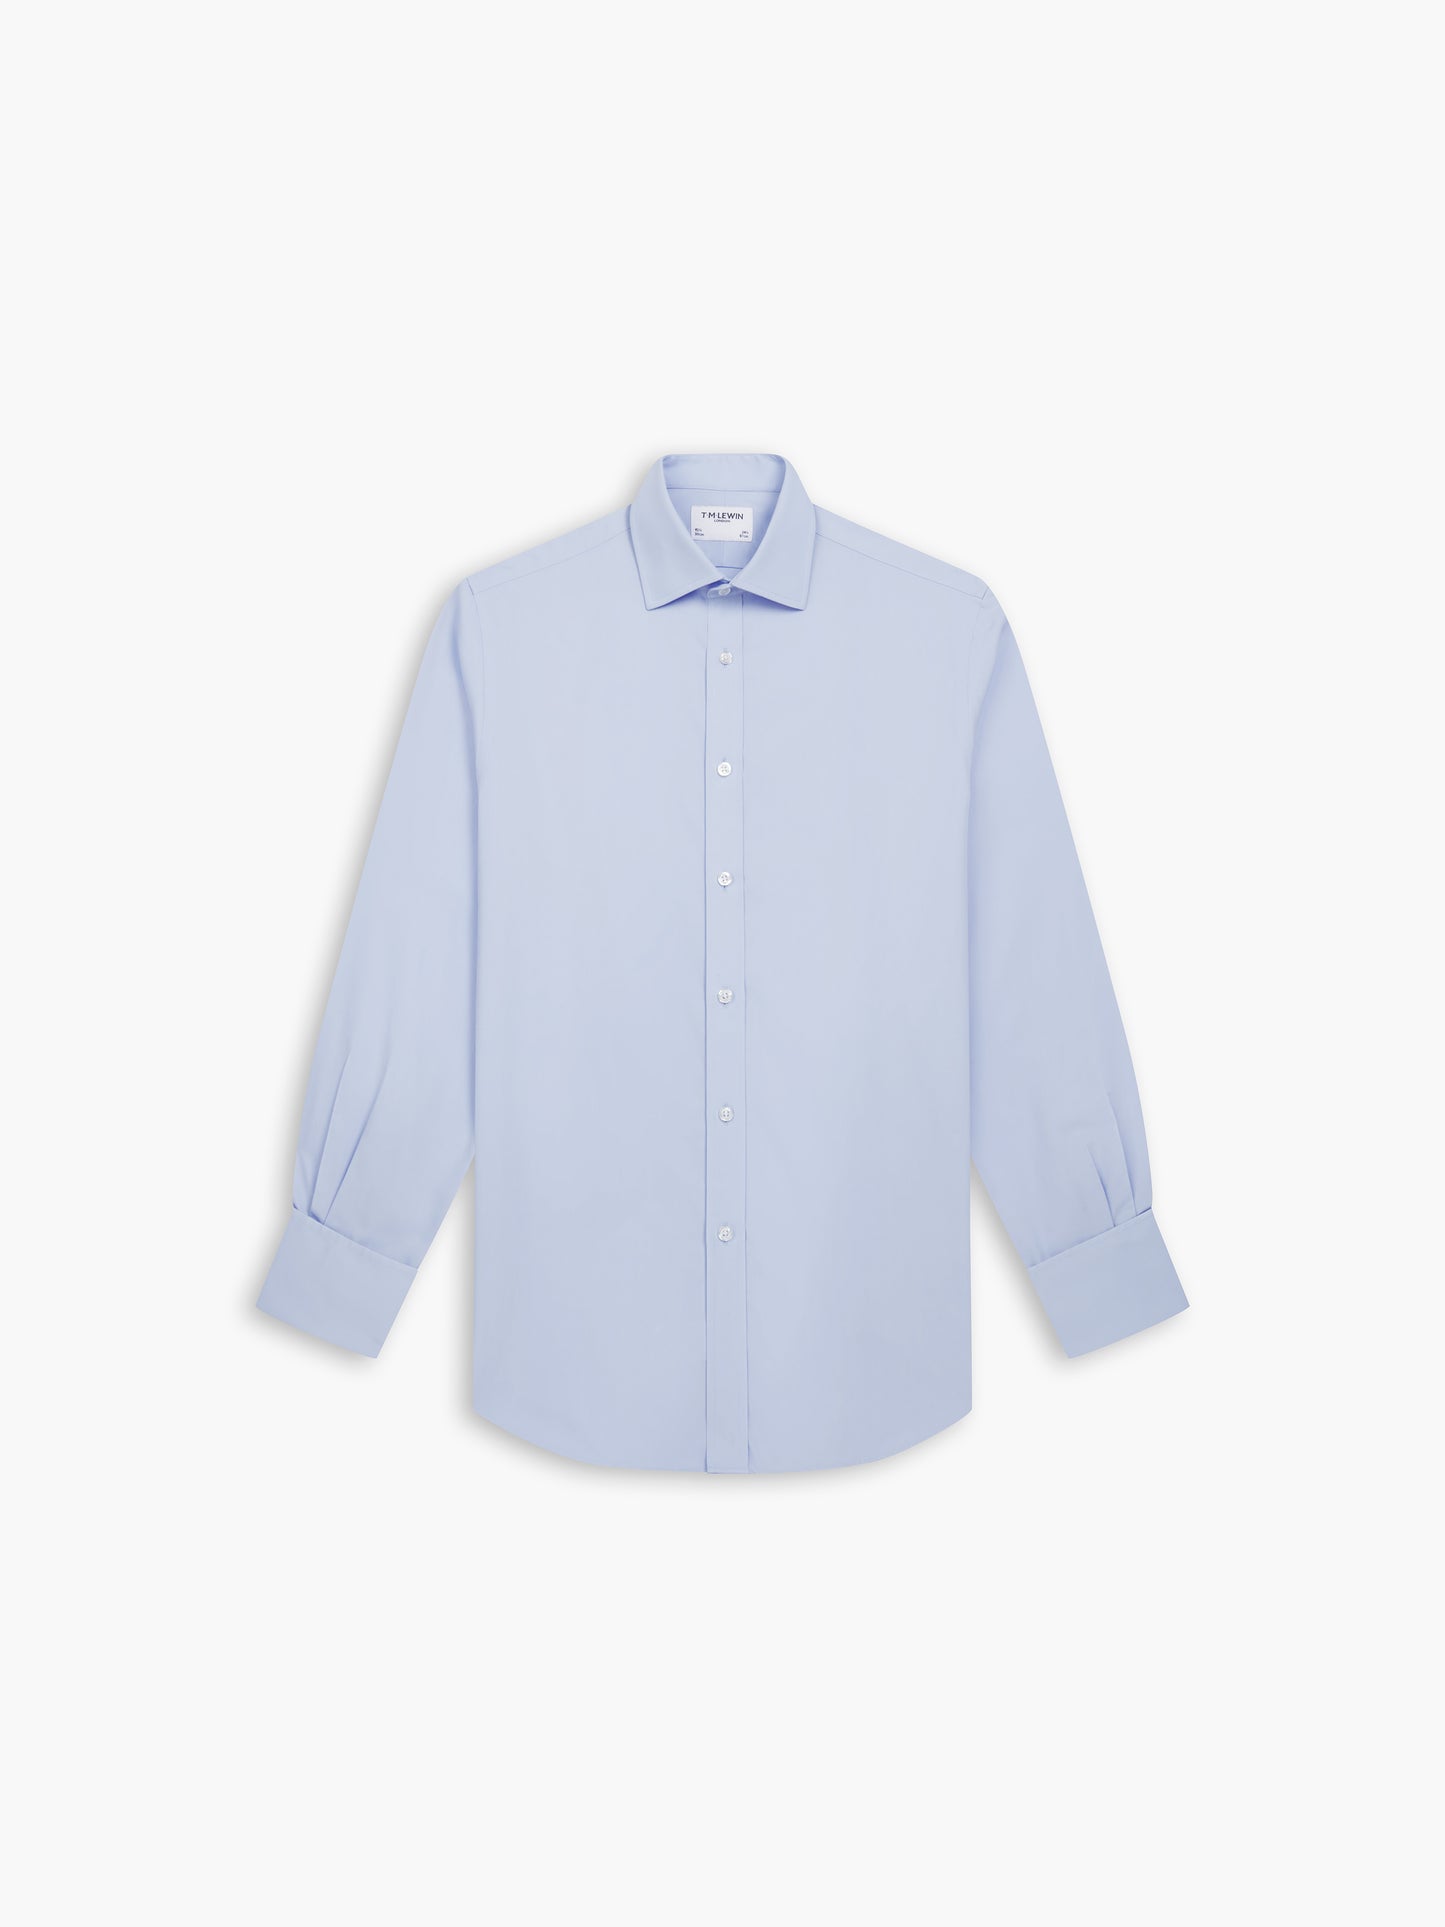 Non-Iron Blue Poplin Fitted Double Cuff Classic Collar Shirt